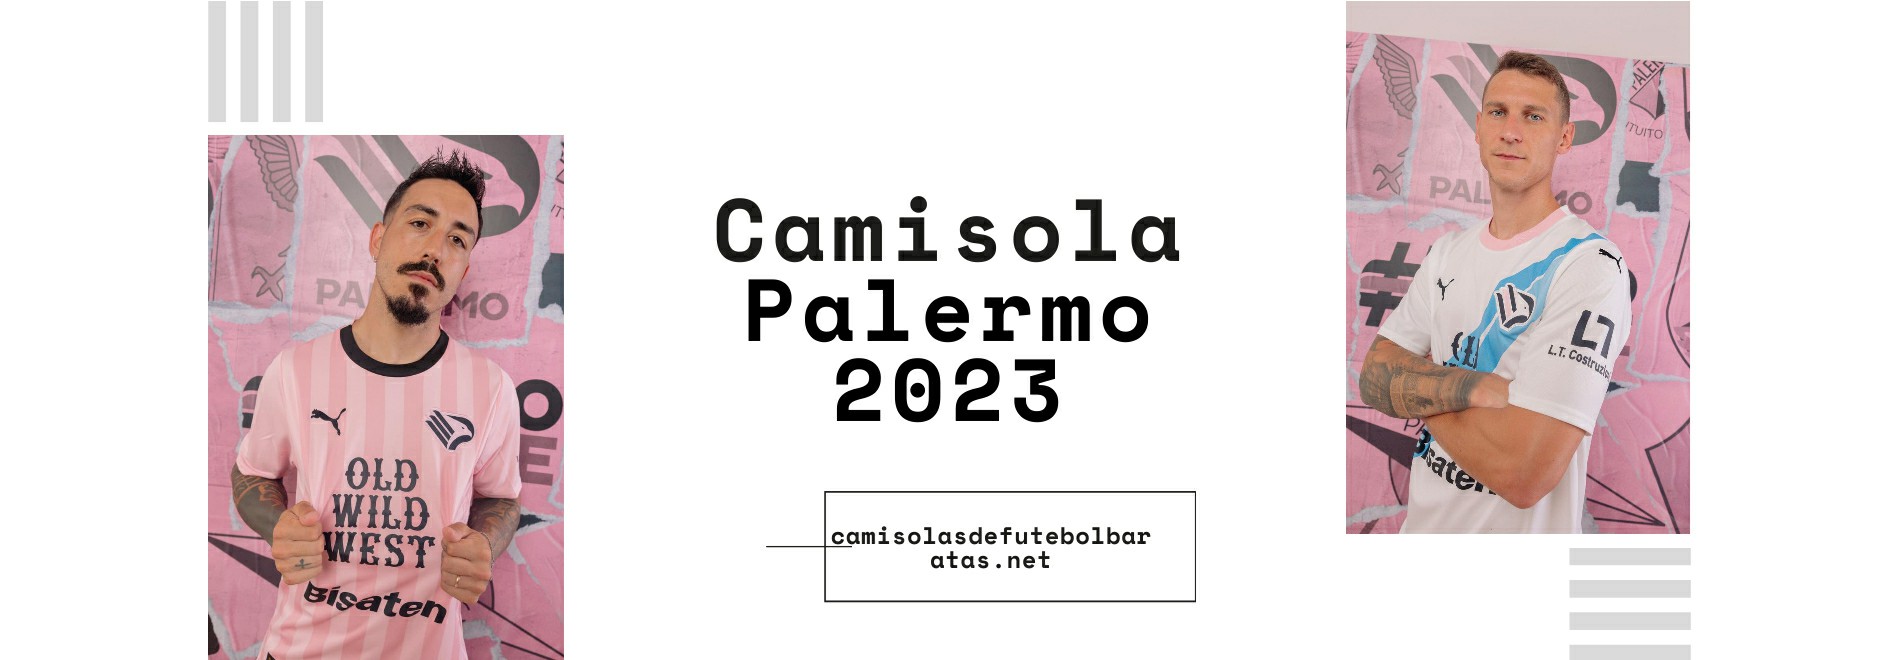 Camisola Palermo 2023-2024